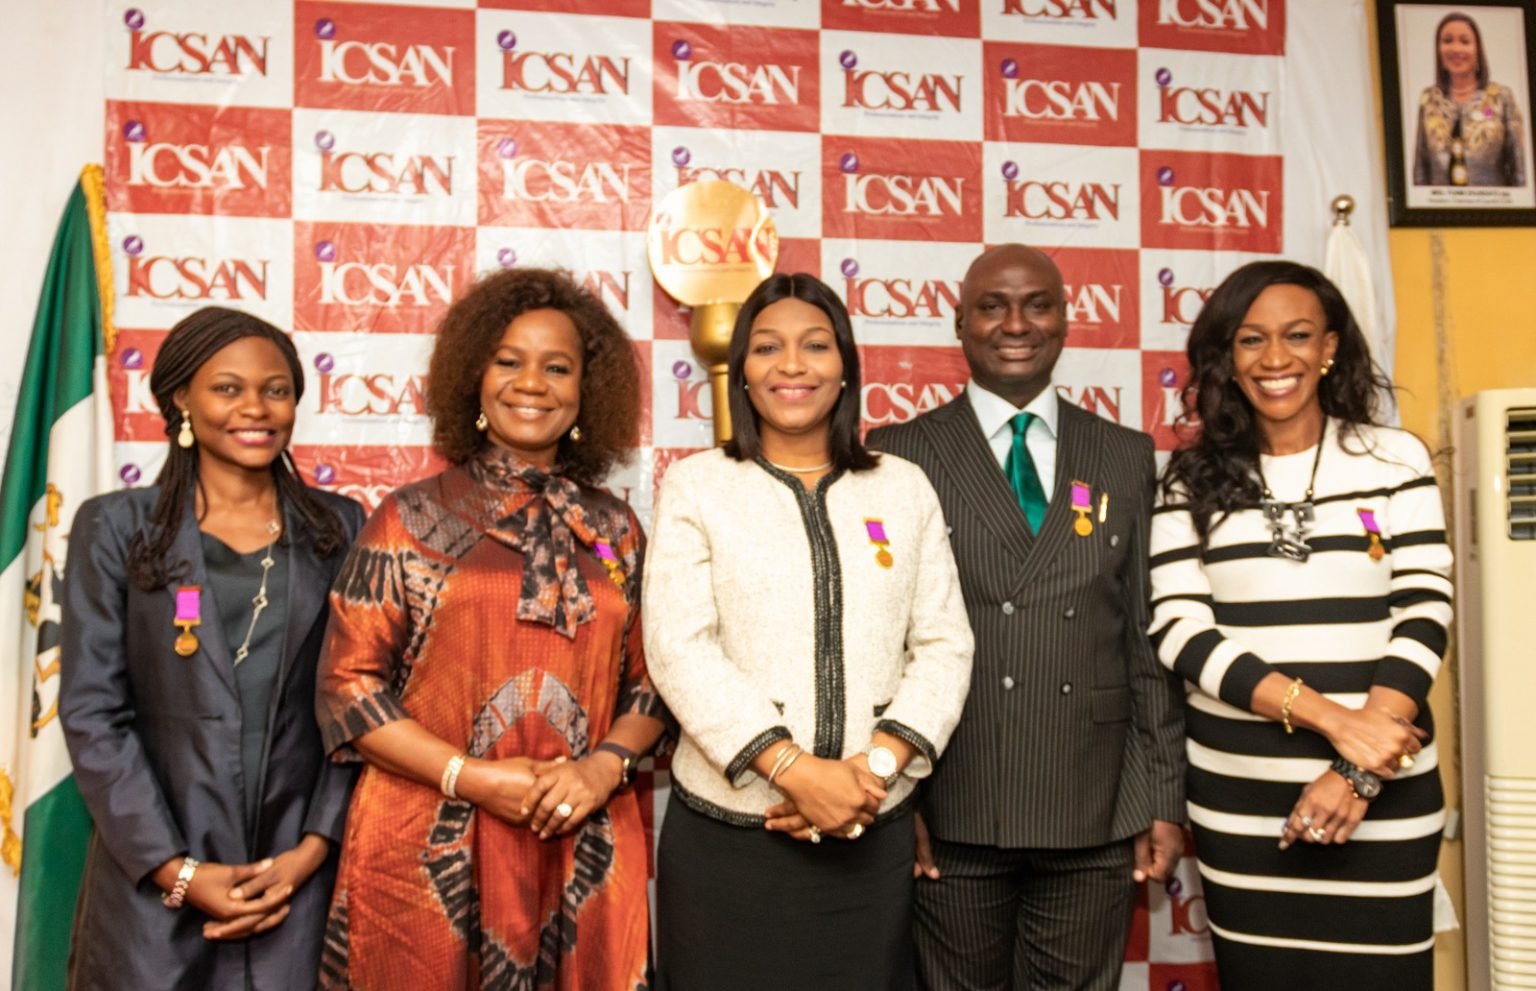 Nigeria: ICSAN urges FG to create a conducive business environment